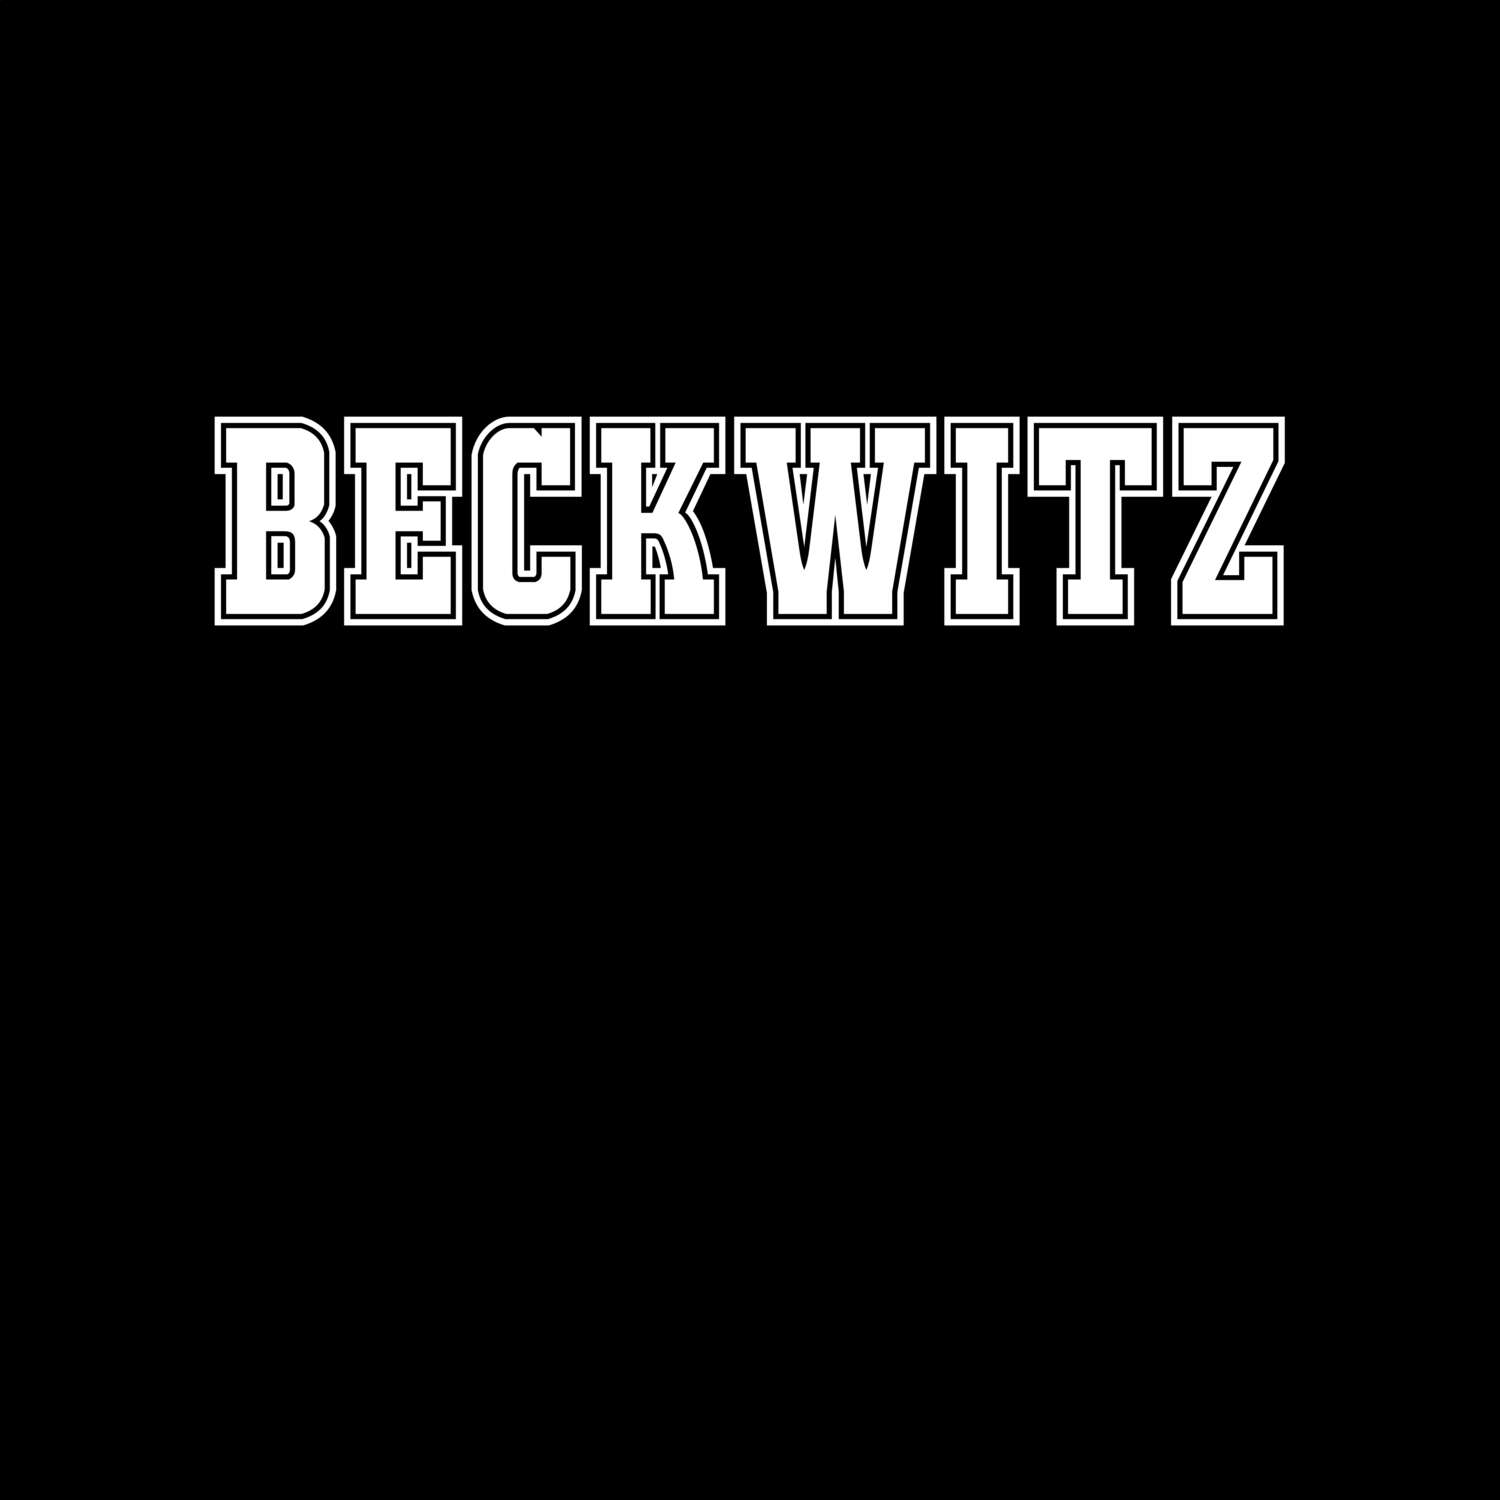 Beckwitz T-Shirt »Classic«